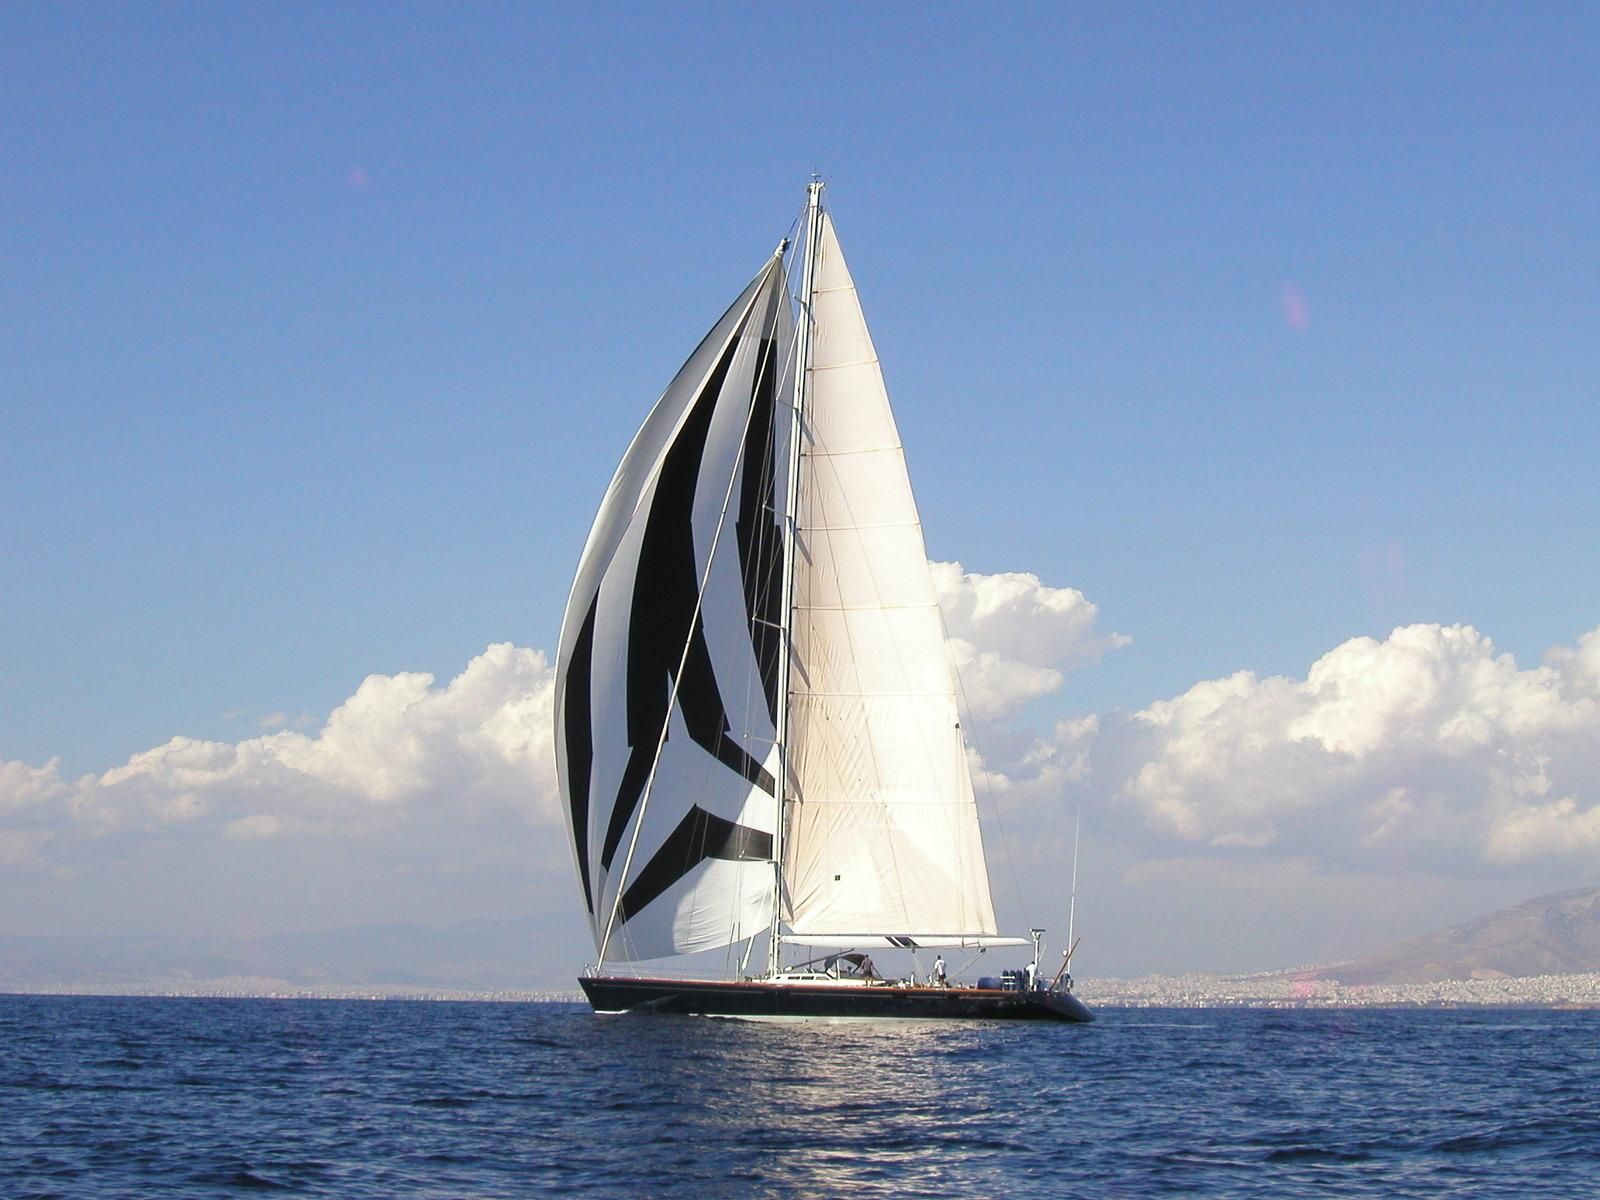 abeking & rasmussen sailboats for sale